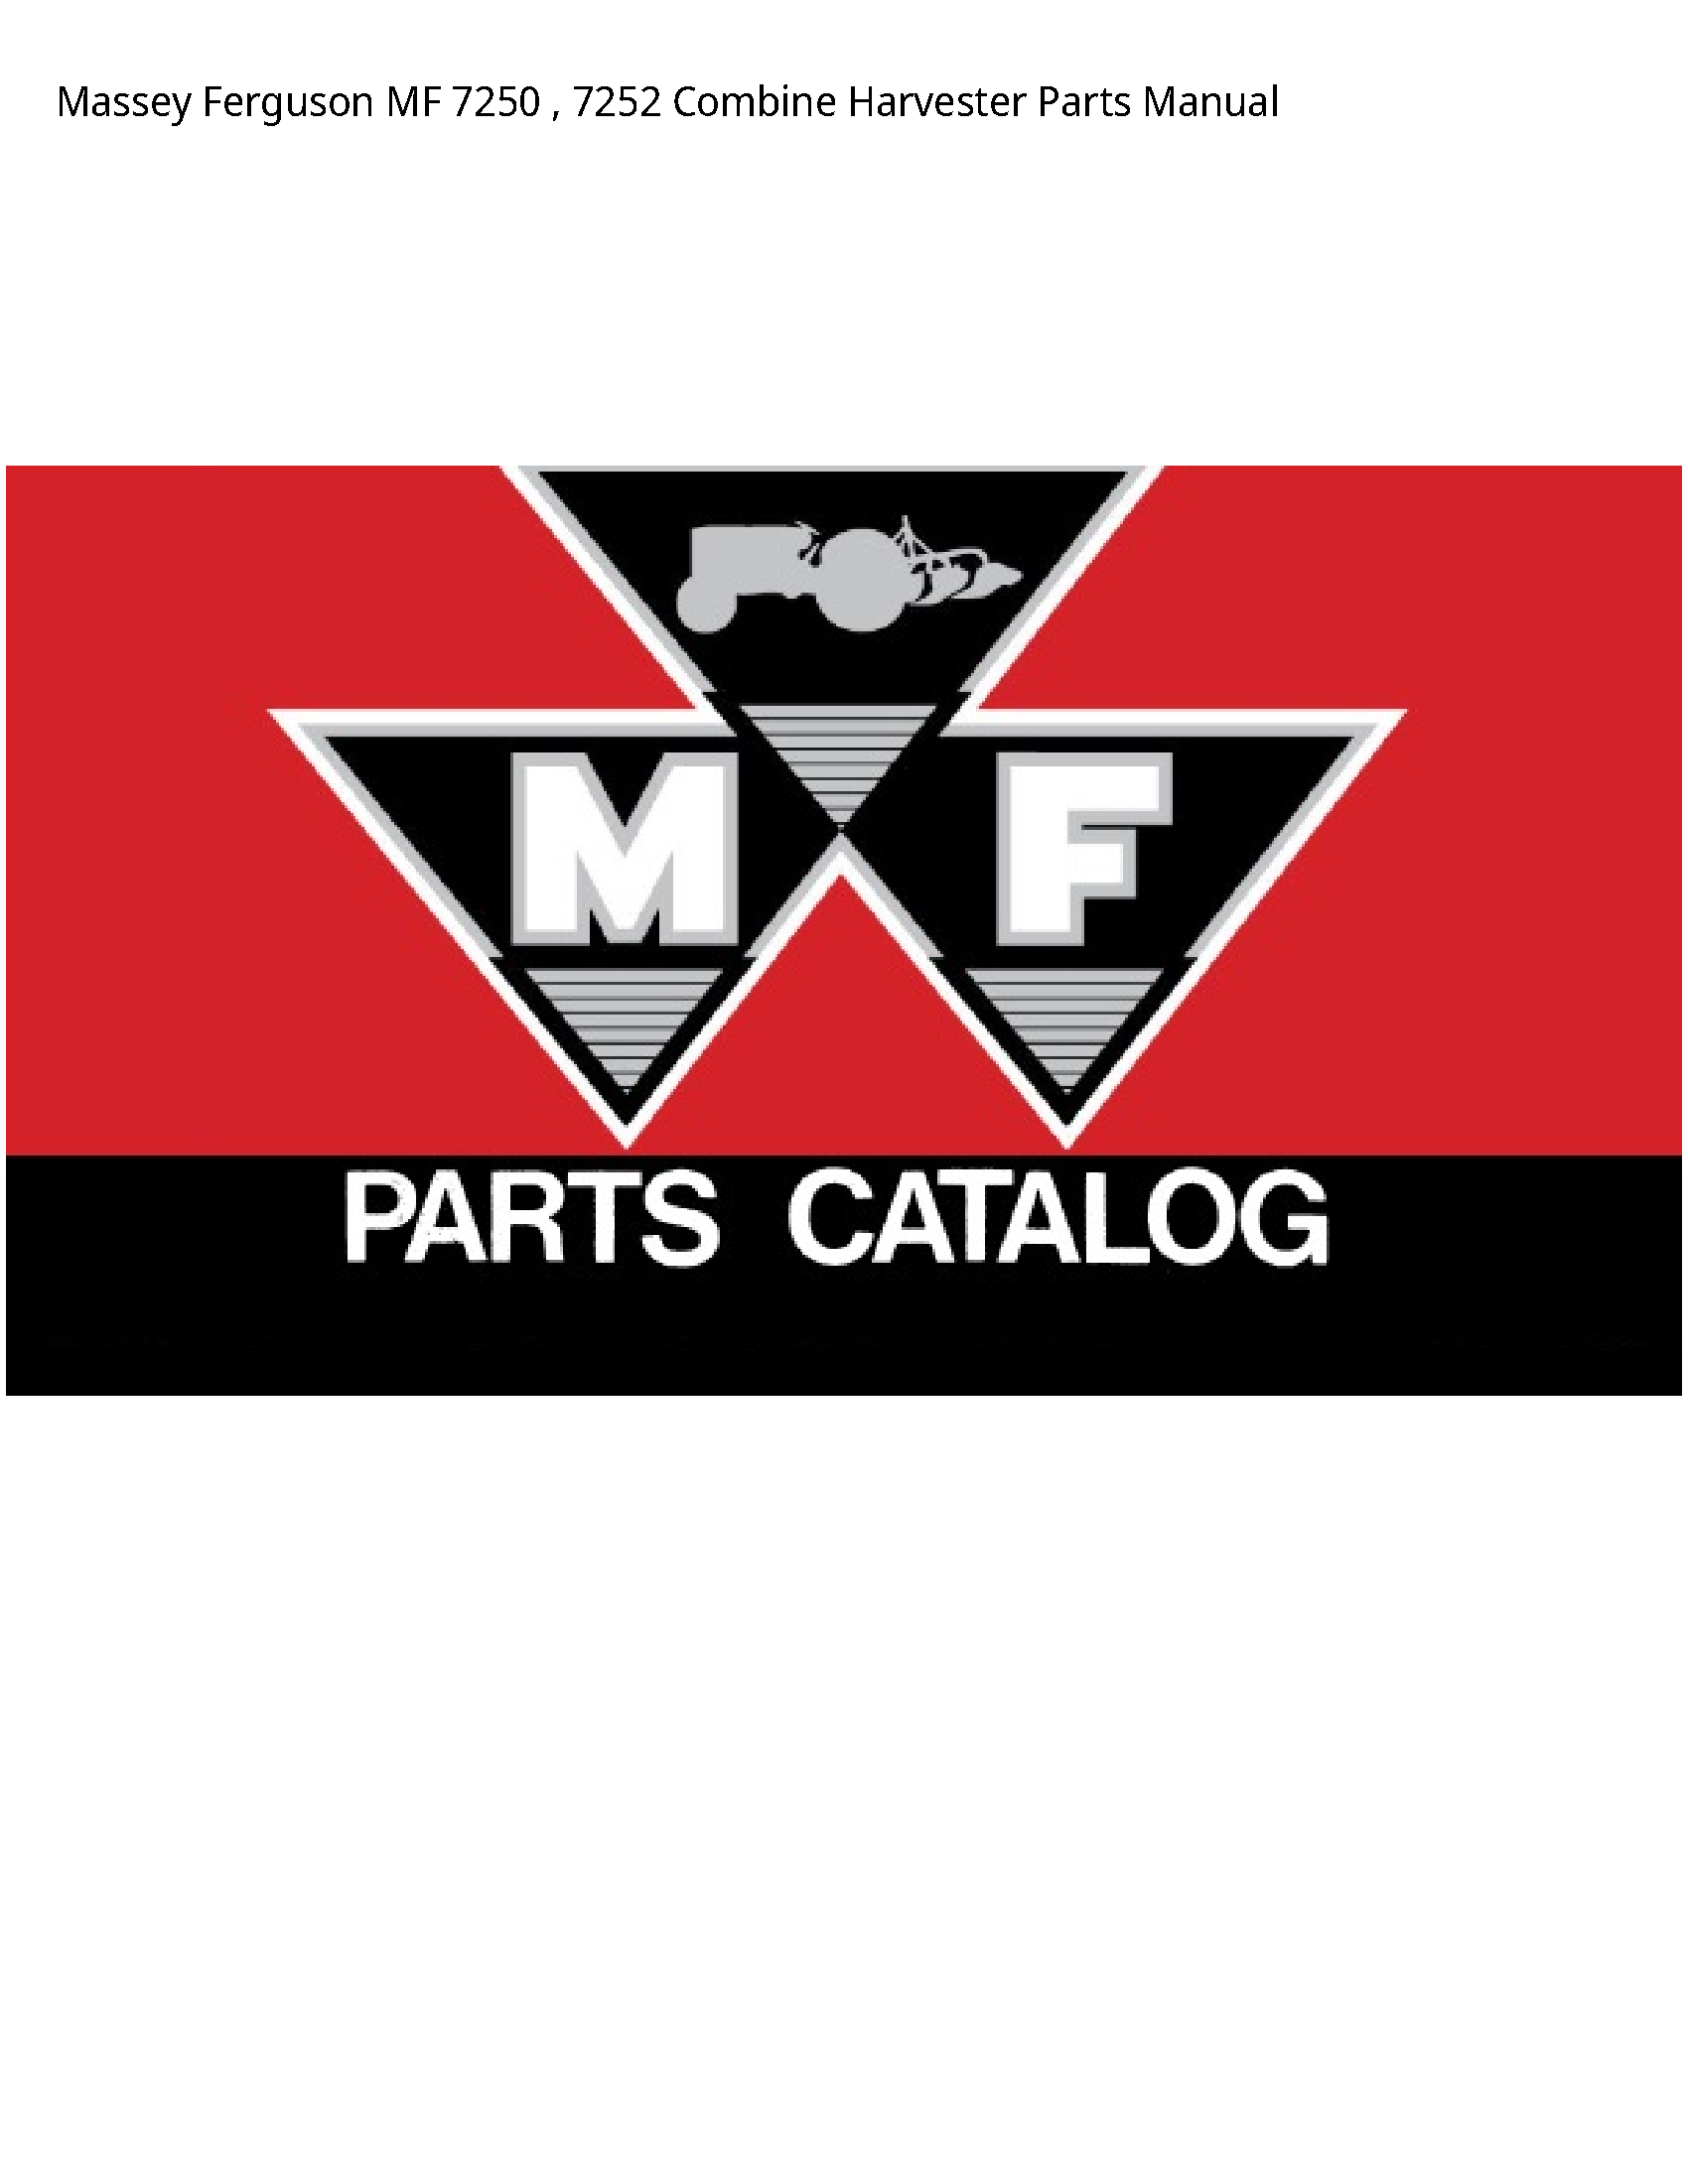 Massey Ferguson 7250 MF Combine Harvester Parts manual